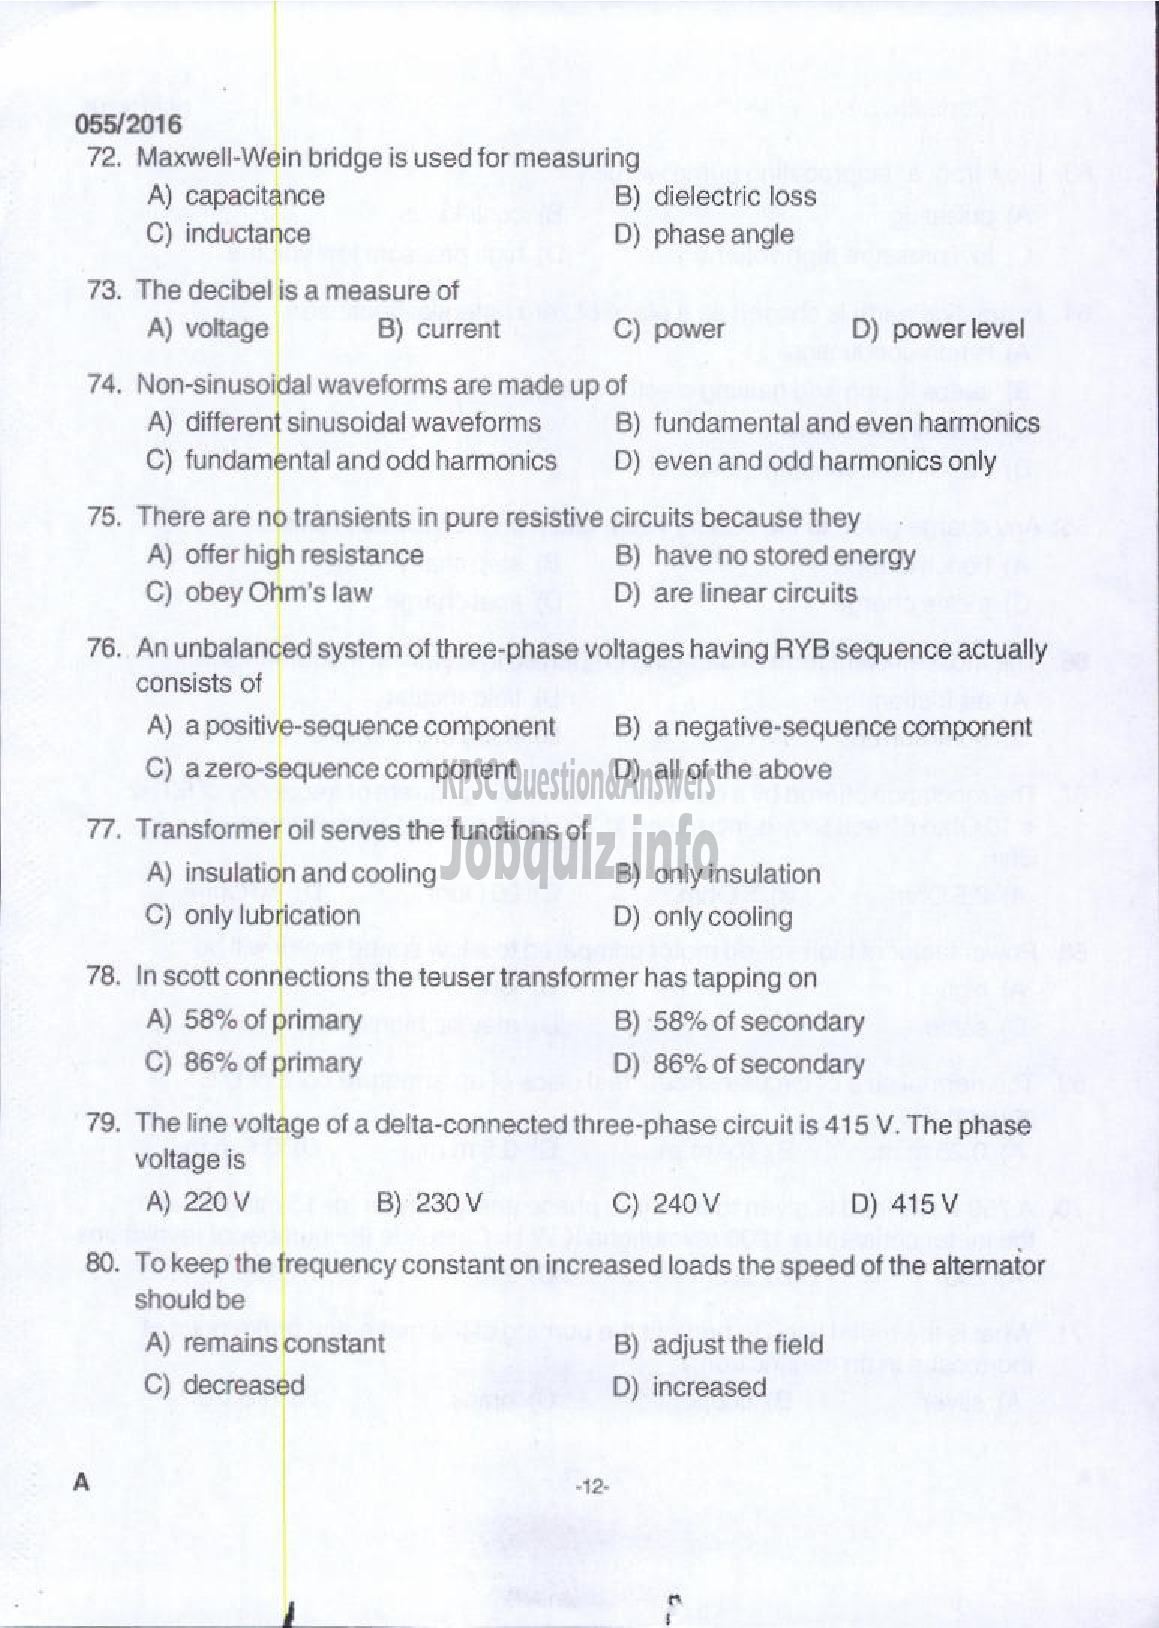 Kerala PSC Question Paper - LINEMAN PUBLIC WORKS ELECTRICAL WING-10